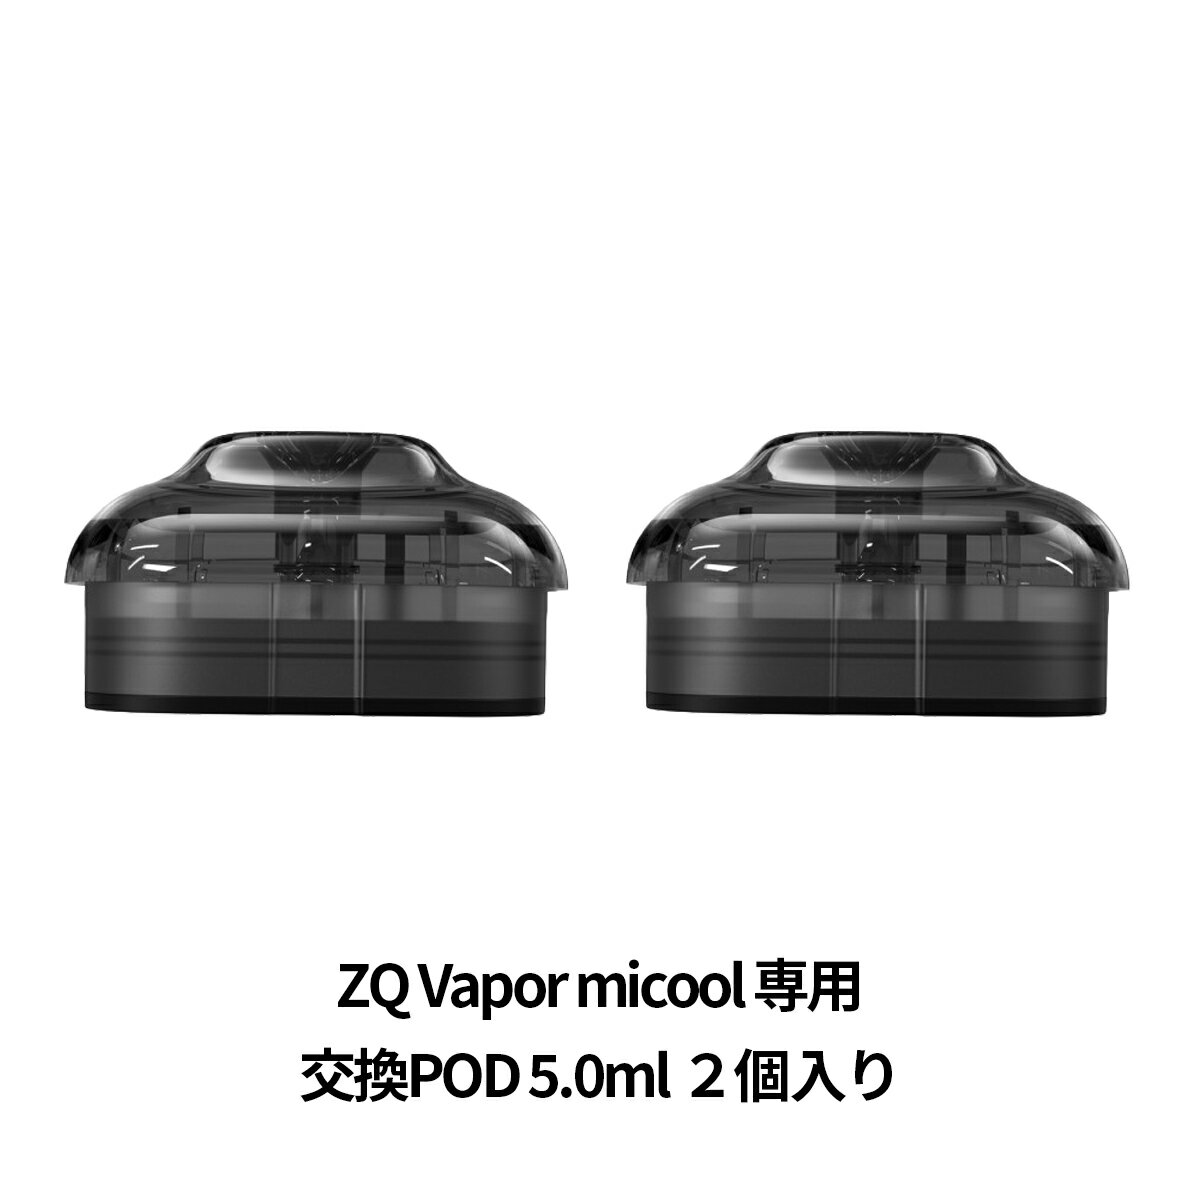 ZQ micool用の交換用POD カートリッジです！ ZQ micool スターターキット用の交換用POD カートリッジです。 1.0Ωコイル内蔵、 5mlタンクの大容量。2個入り1箱になります。 【スターターキット】 ZQ micool スターターキット 商品仕様 ブランド ZQ (ゼットキュー) 商品名 ZQ micool POD Cartridge （ゼットキュー / ミクール ポッドカートリッジ) セット内容 POD カートリッジ 2個入り × 1パック リキッド容量 5.0 ml 抵抗値 1.0 Ω メッシュコイル 関連商品 ZQ micool スターターキット同梱おすすめ商品はこちらご購入はこちらからご購入はこちらから